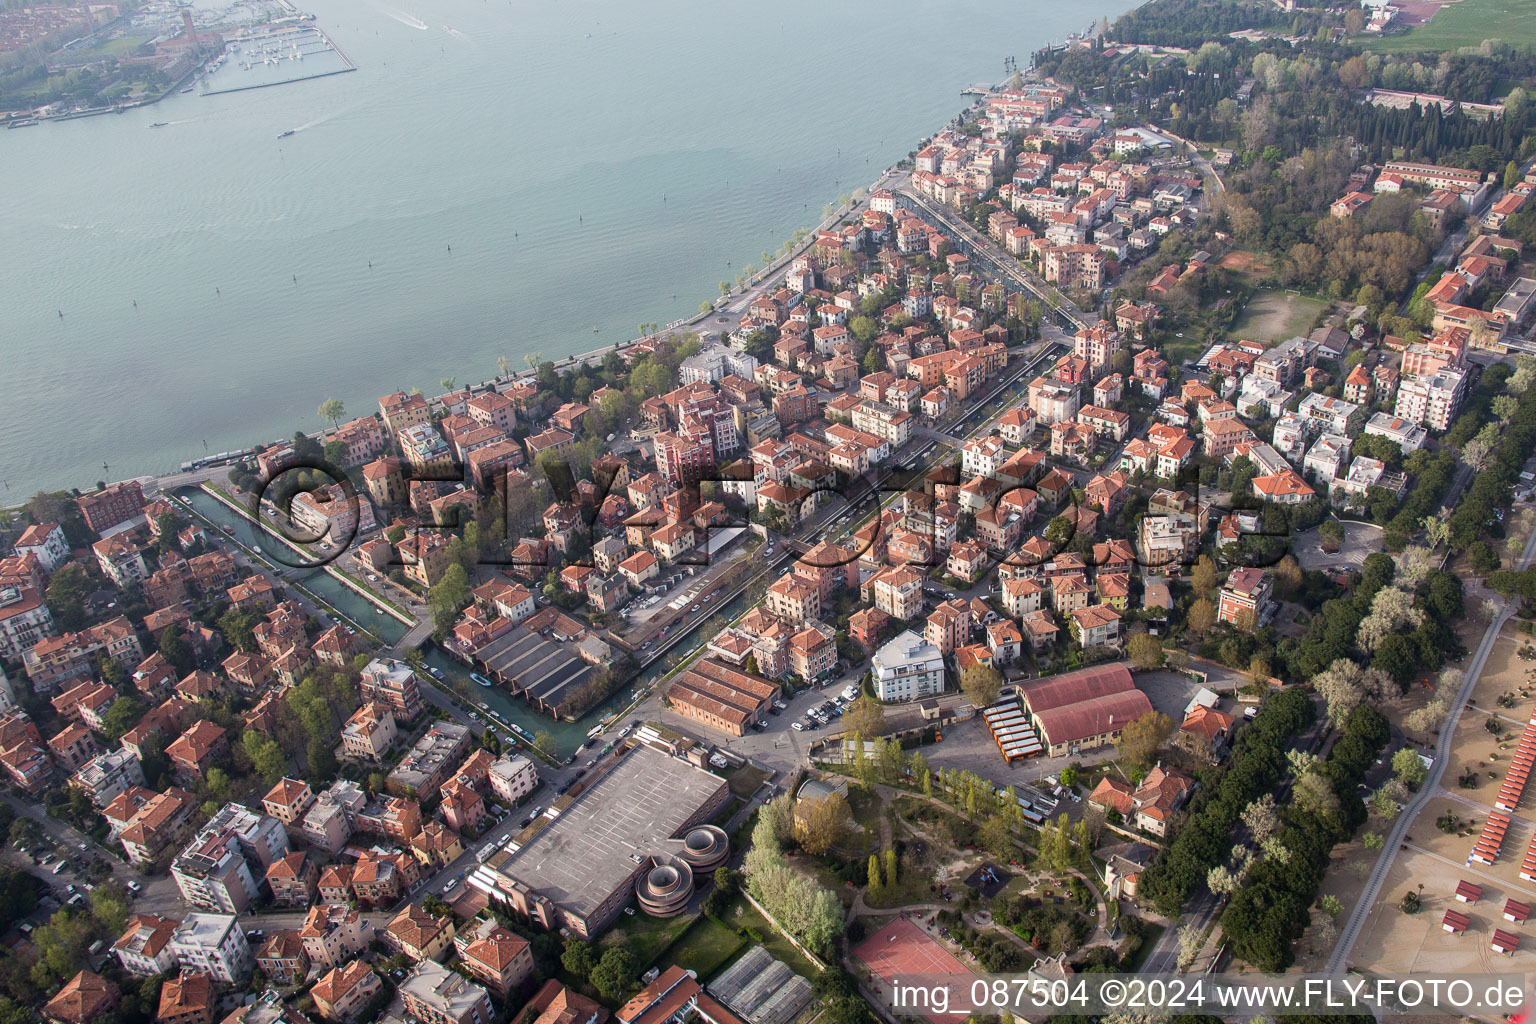 Luftbild von Venezia im Bundesland Venetien, Italien